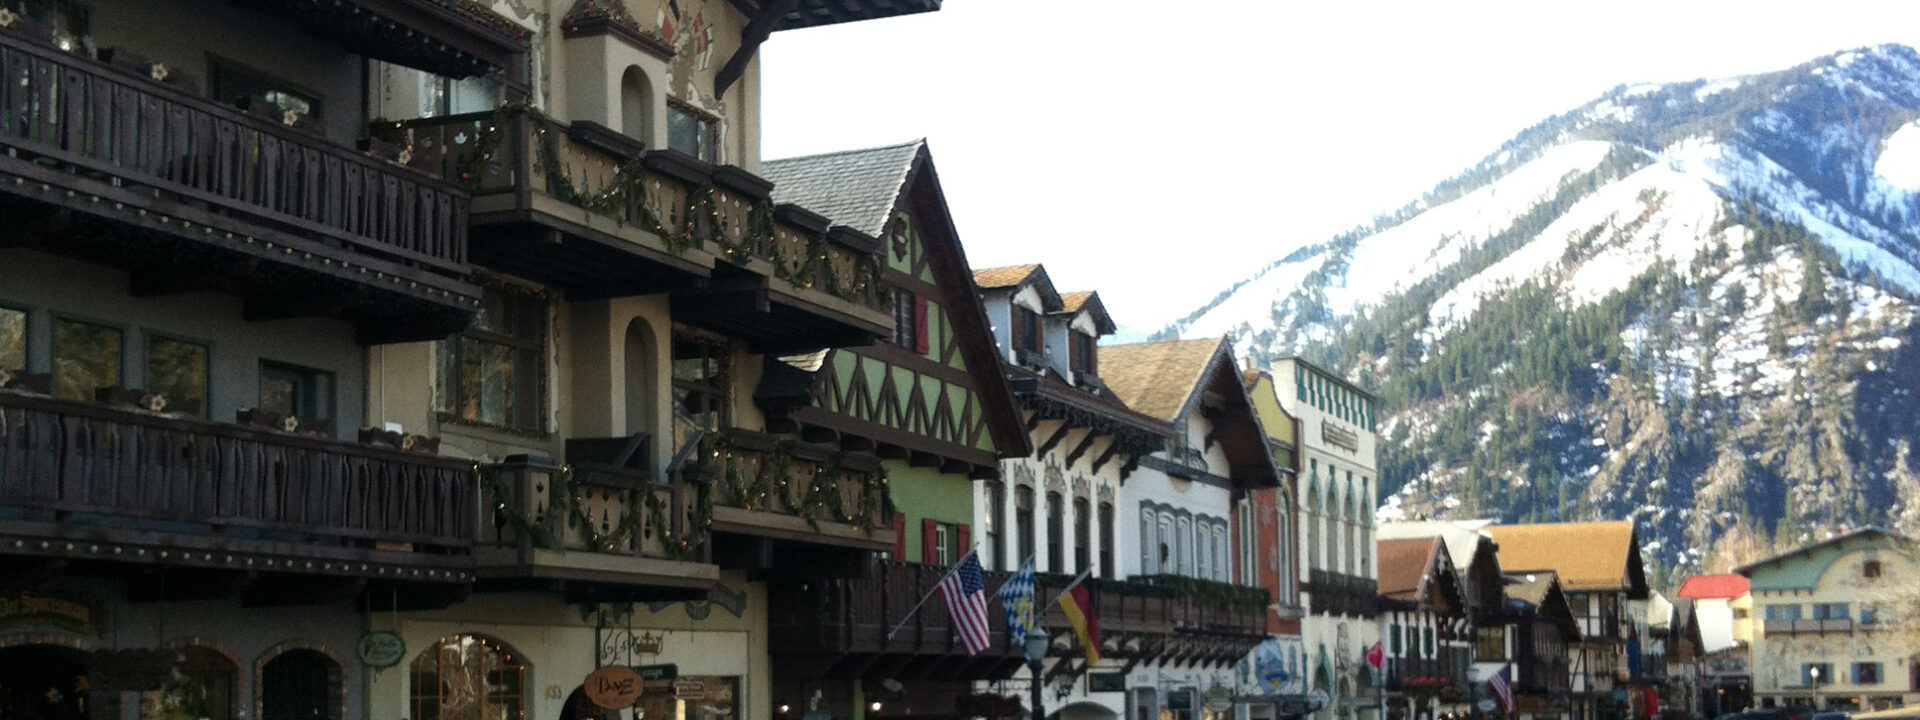 Leavenworth I A True Bavarian Experience in Washington